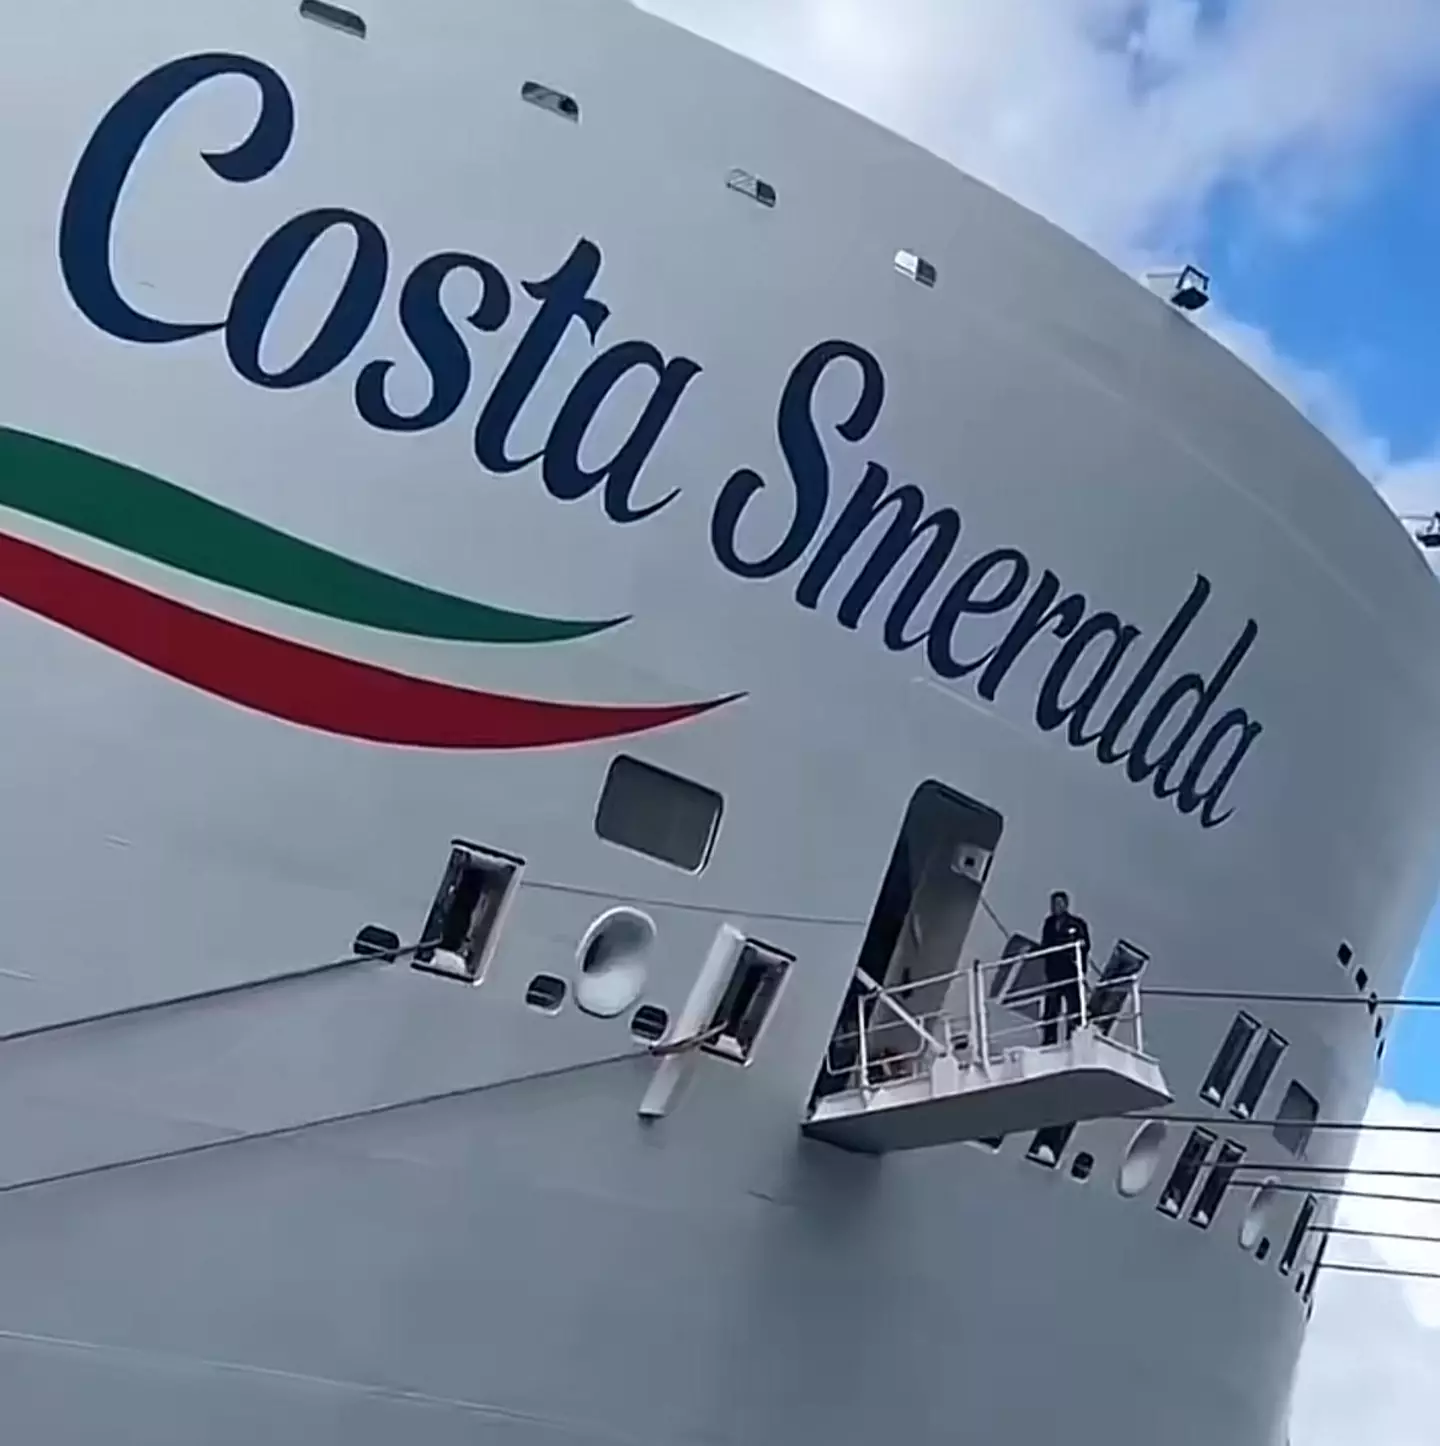 Emma was on board the Costa Smeralda.